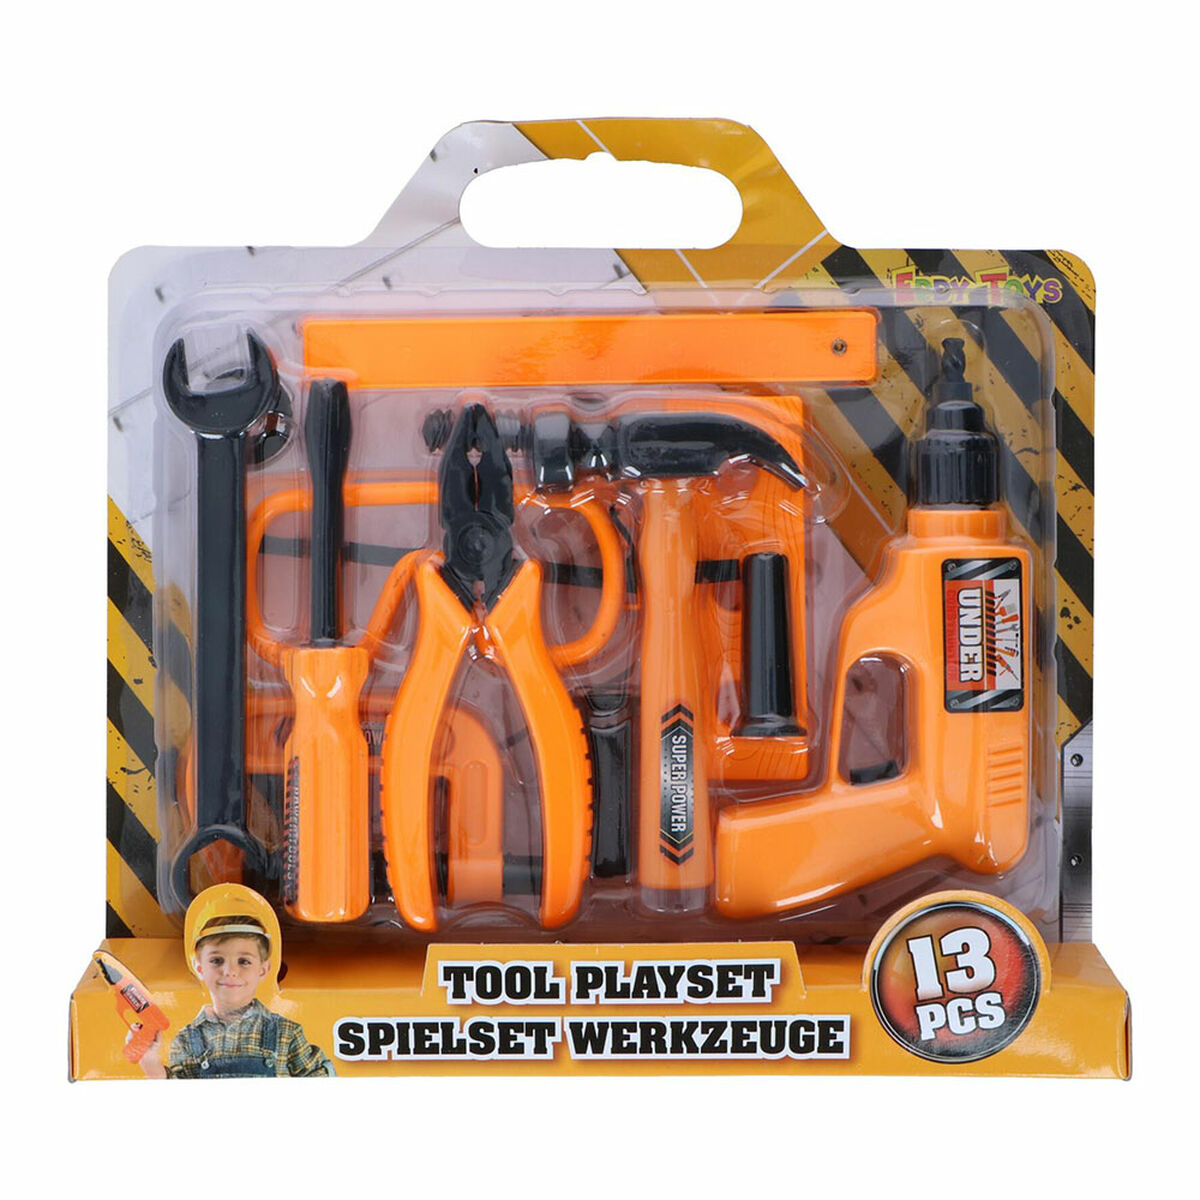 Toy tools Eddy Toys 13 Pieces